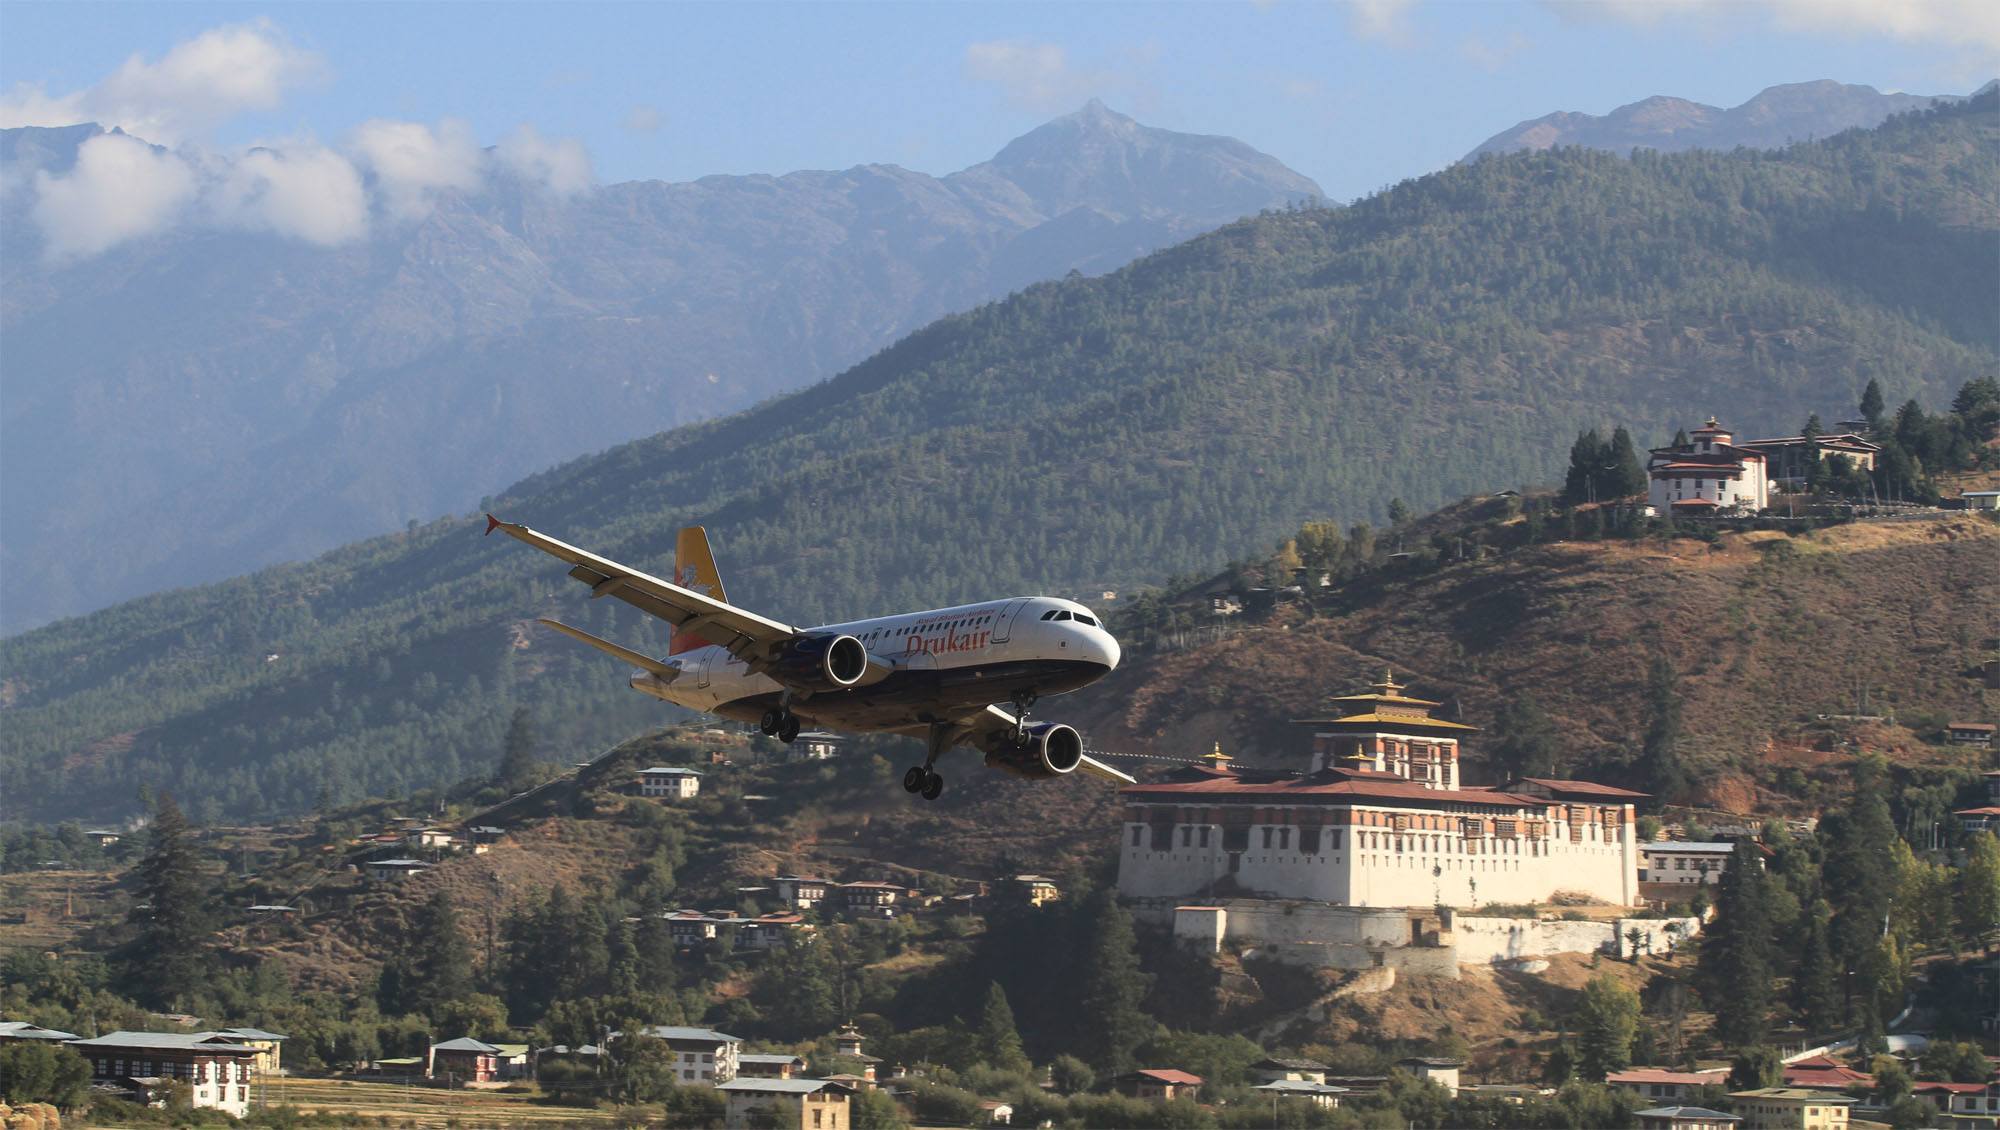 How to Get to Bhutan